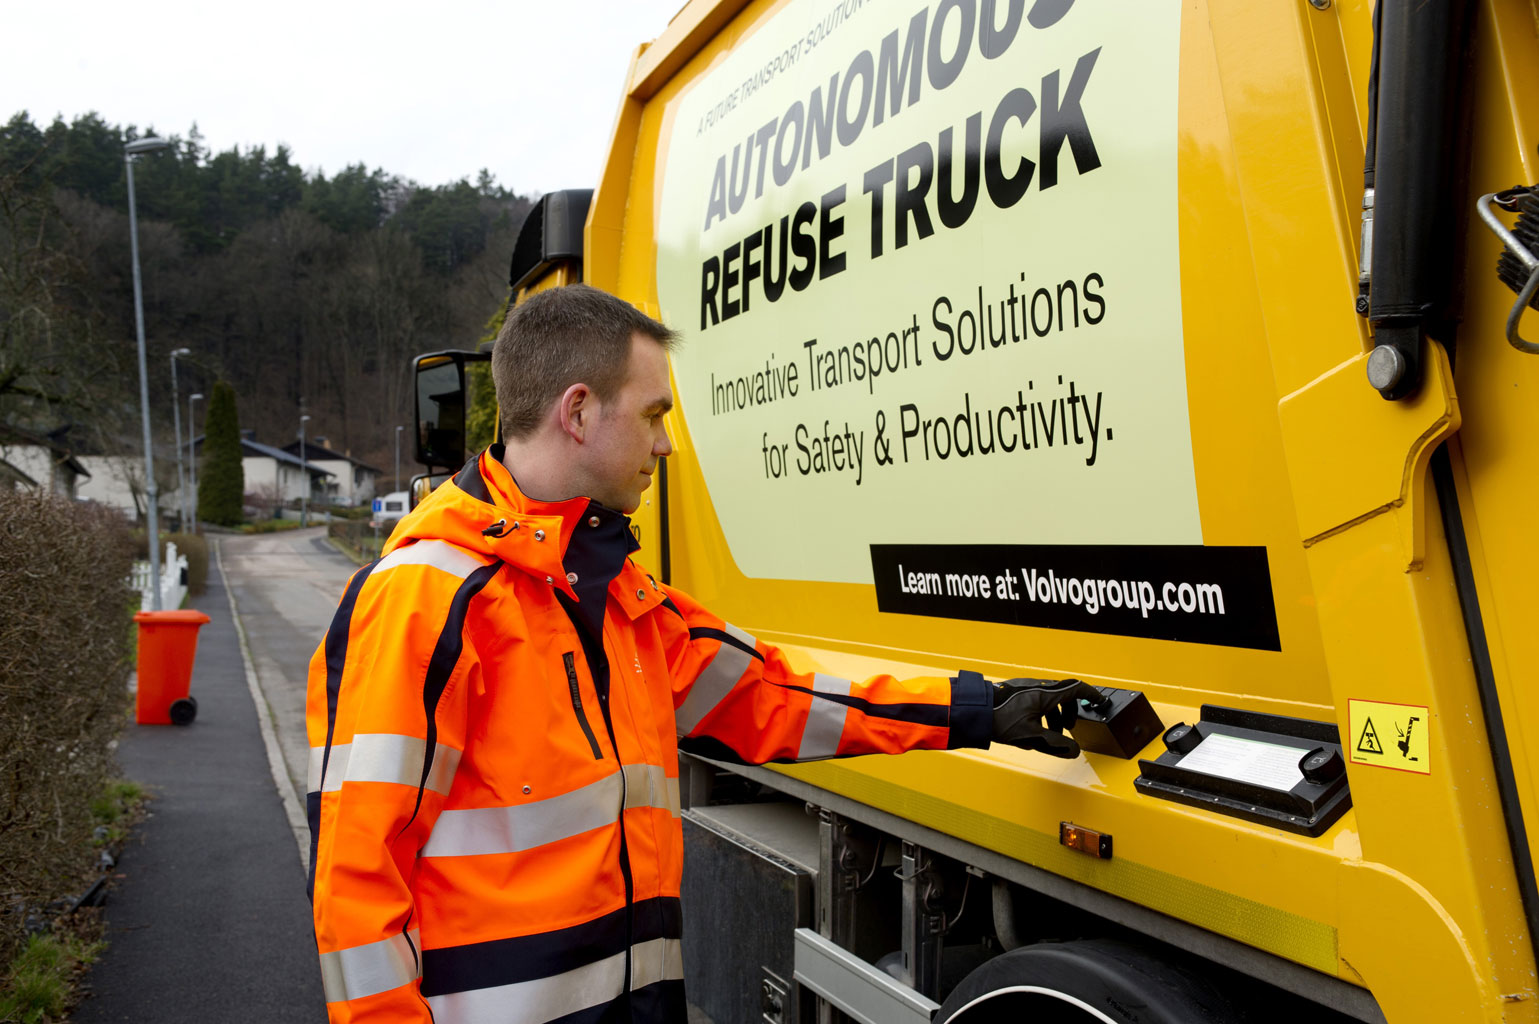 Volvo Trucks camion basura autonomo